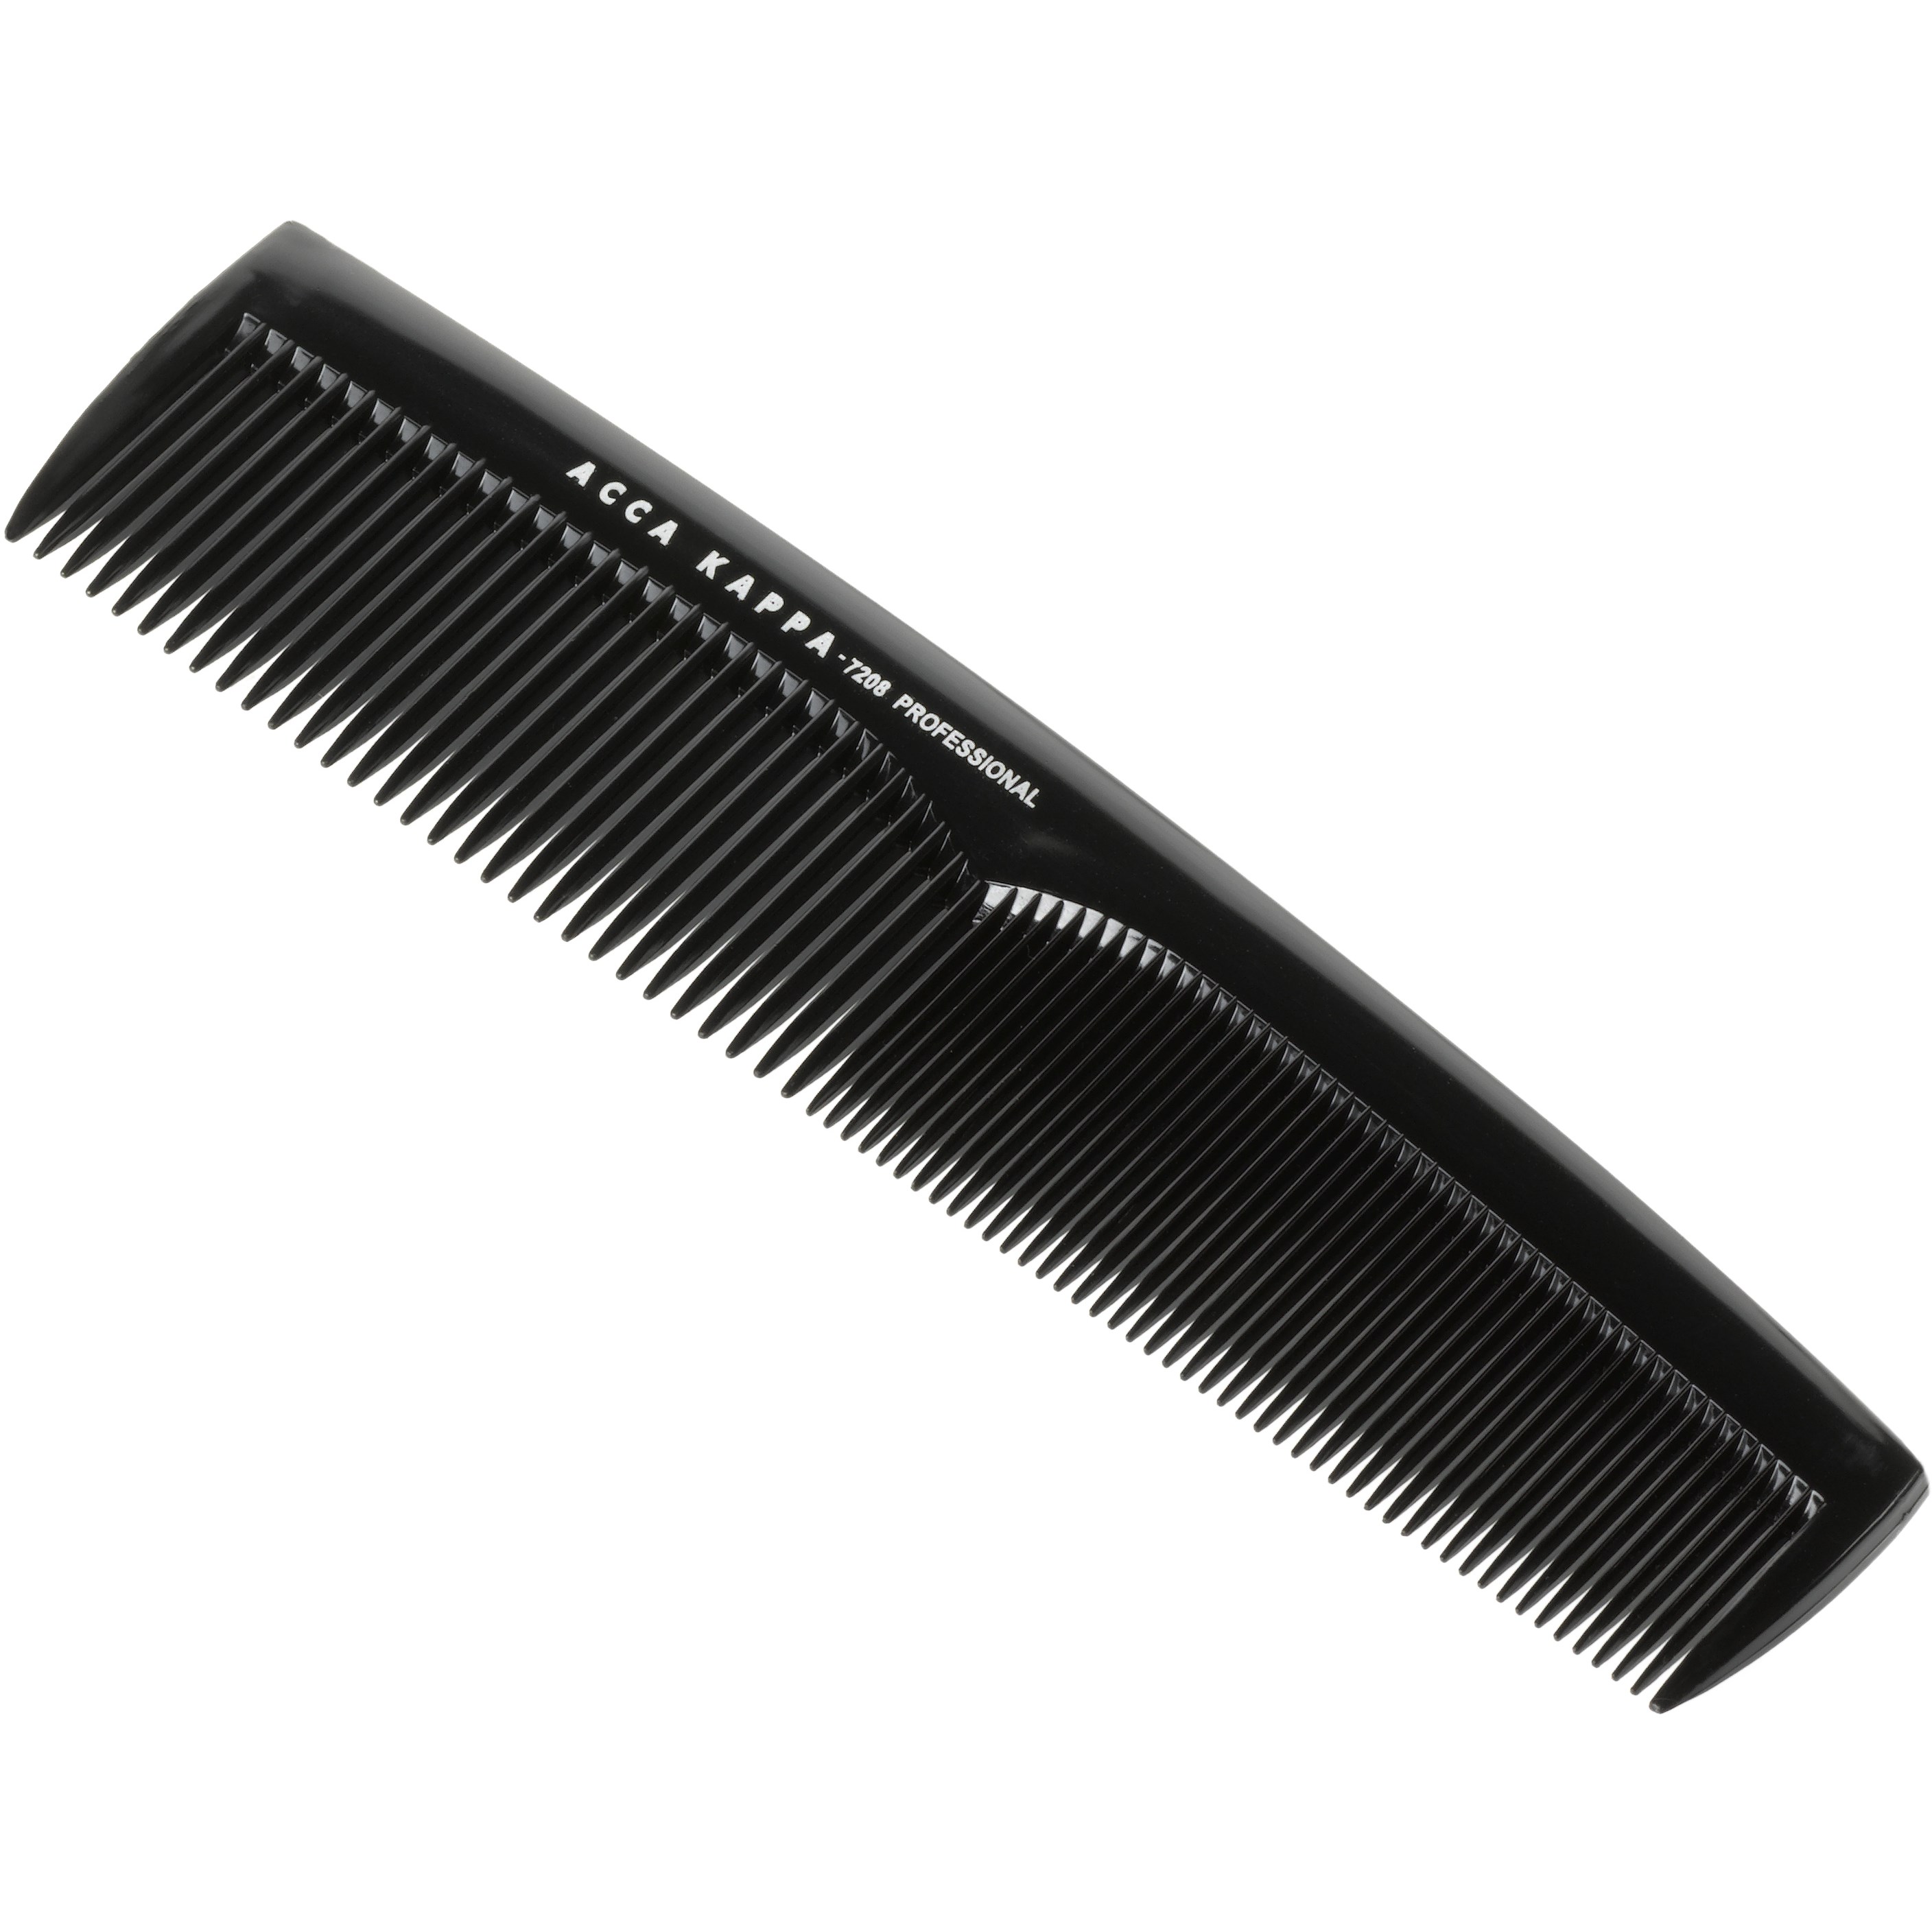 Acca Kappa Professional Styling Fine Coarse Teeth Comb – 7208 Black